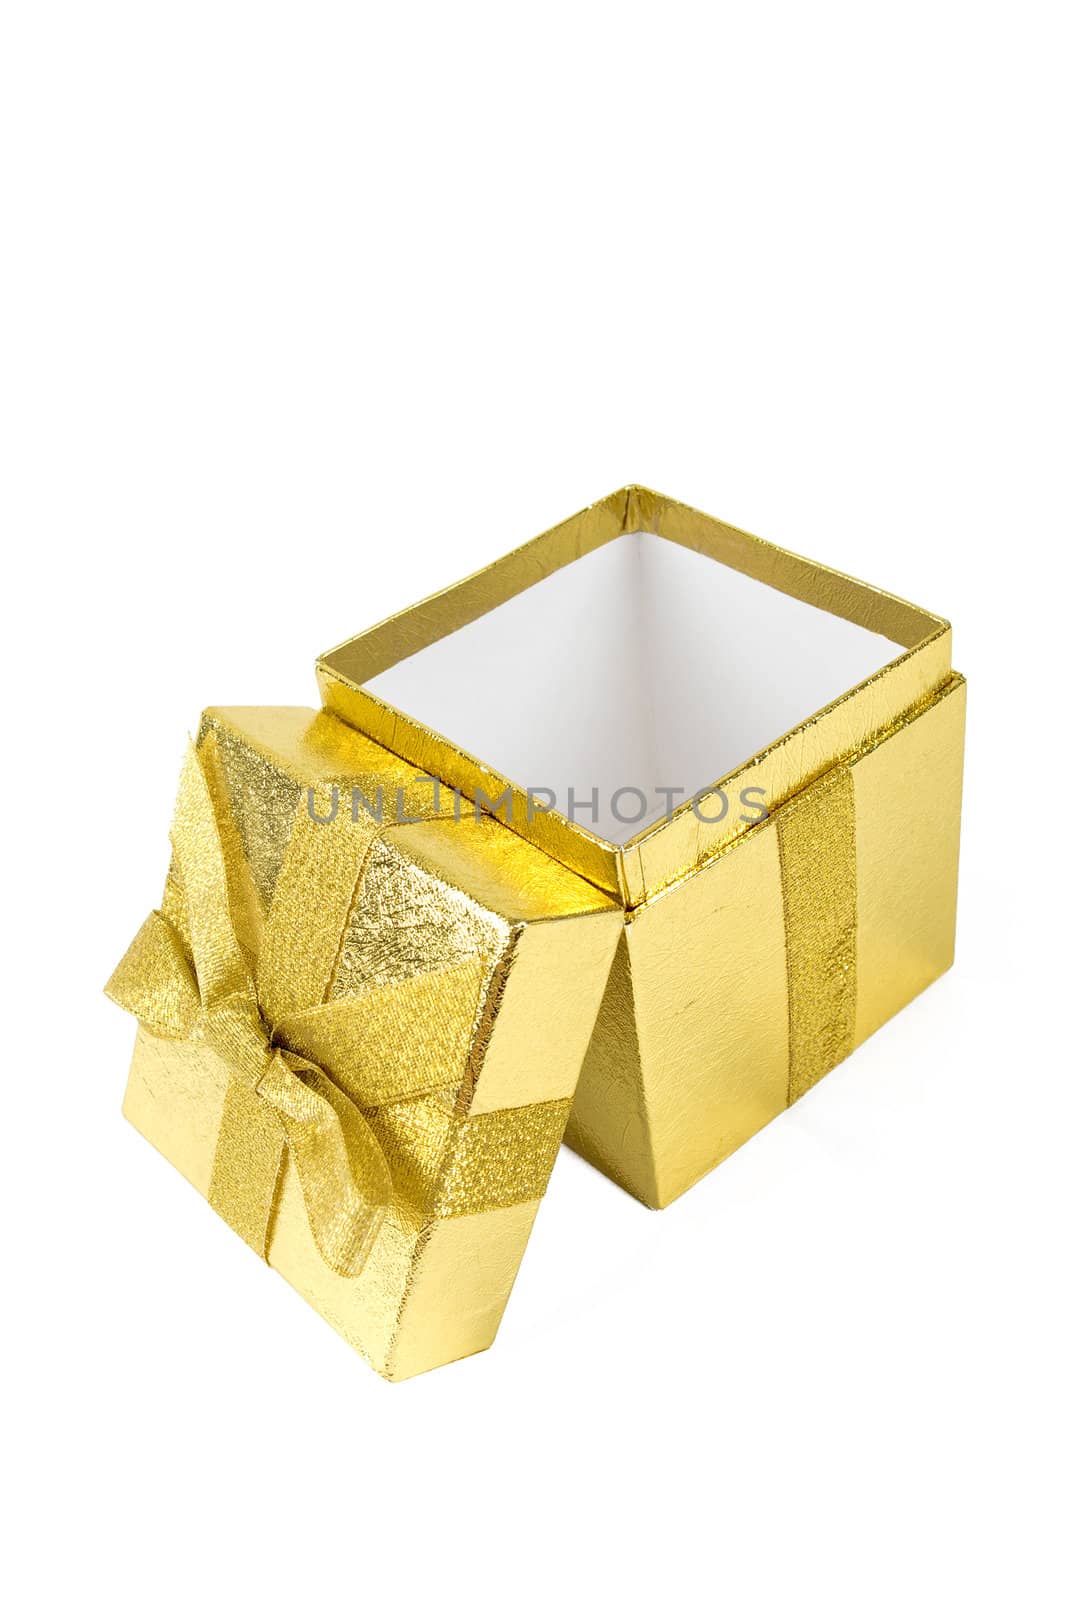 Shining gift box by rachwal